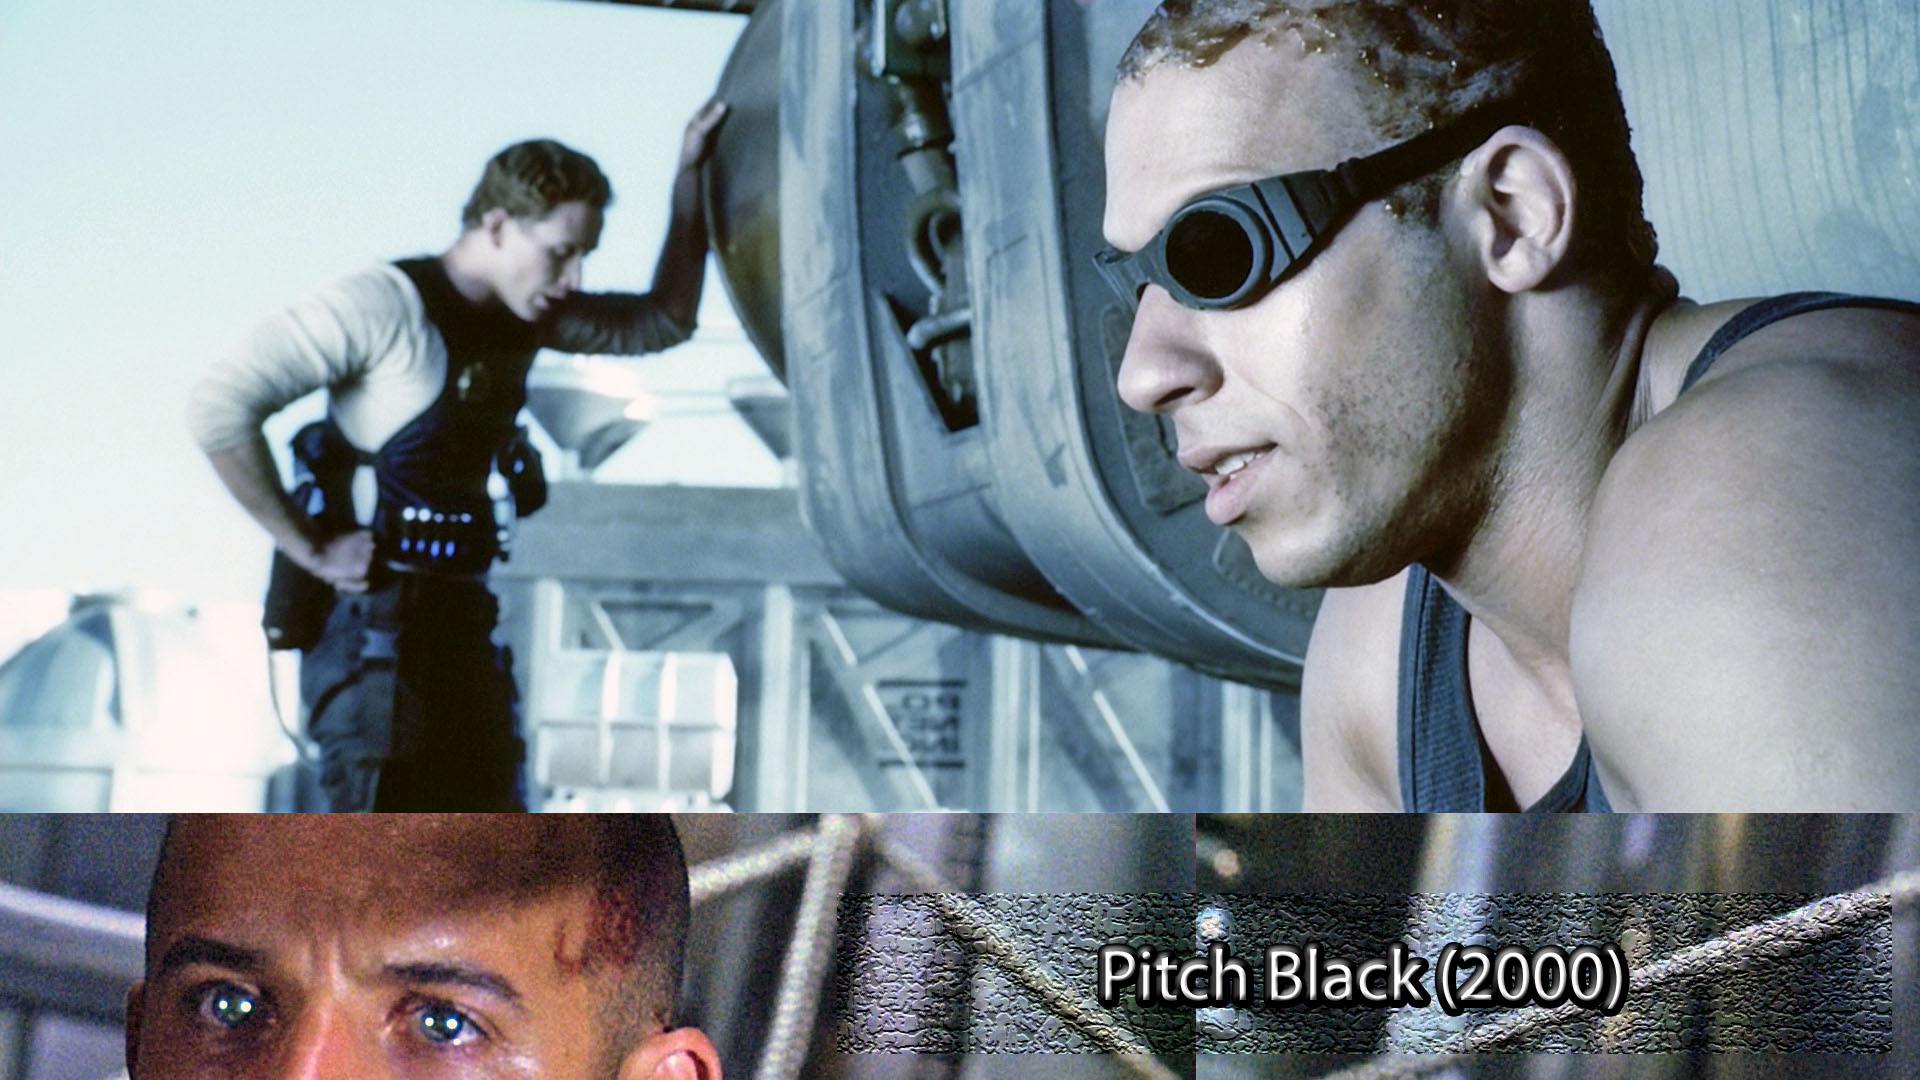 Pitch Black 2000 - Movies Wallpaper (35469647) - Fanpop